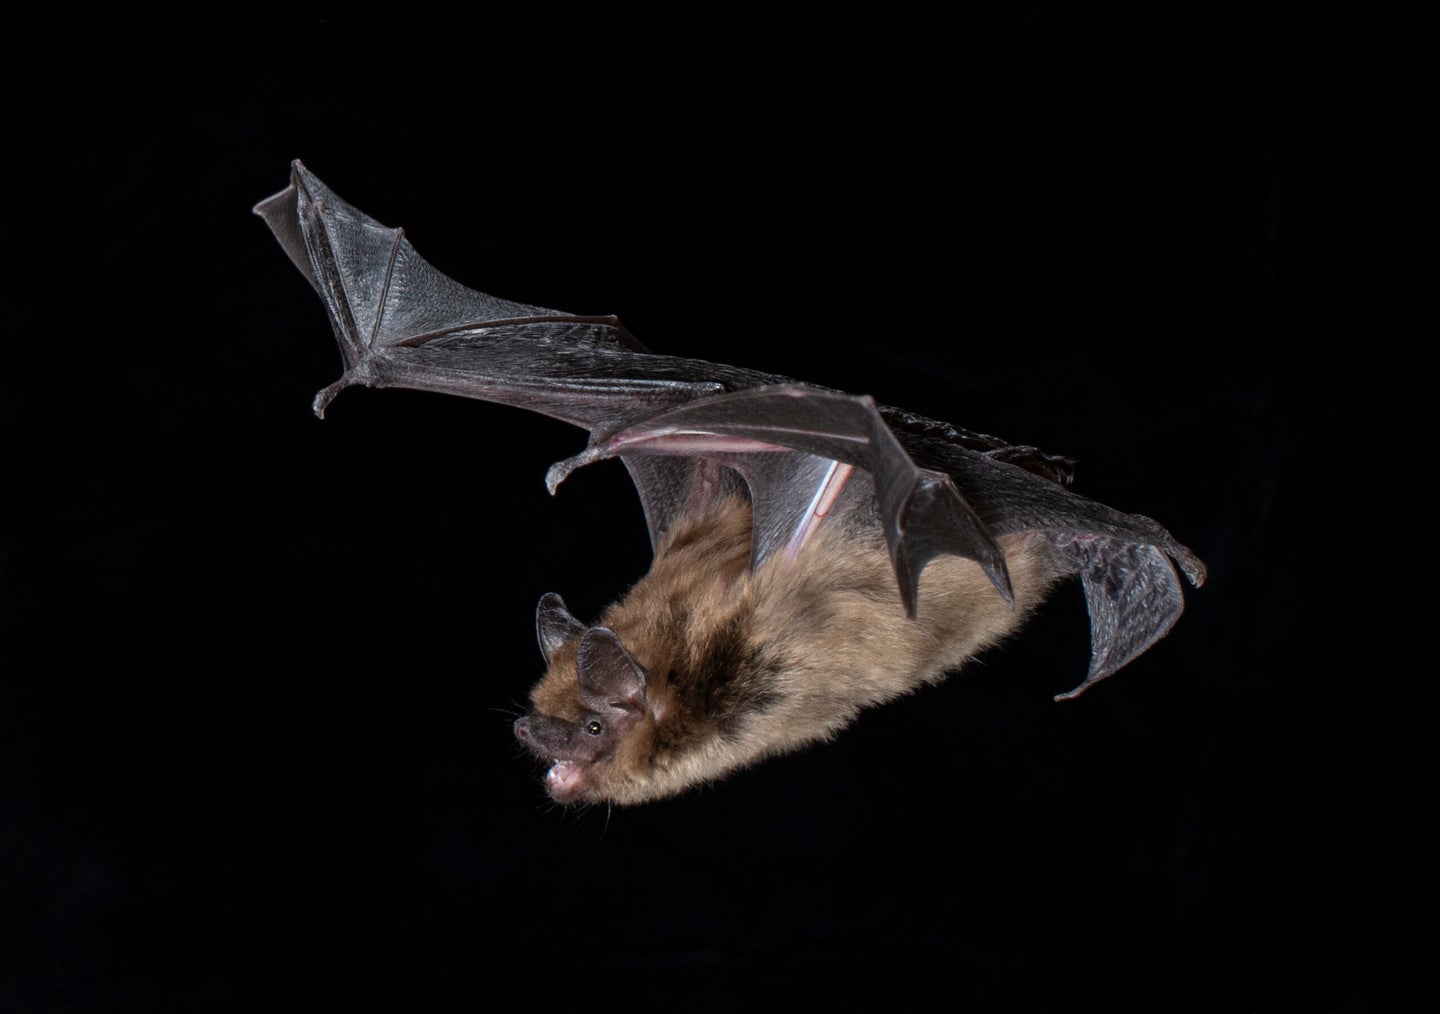 a brown bat in flight